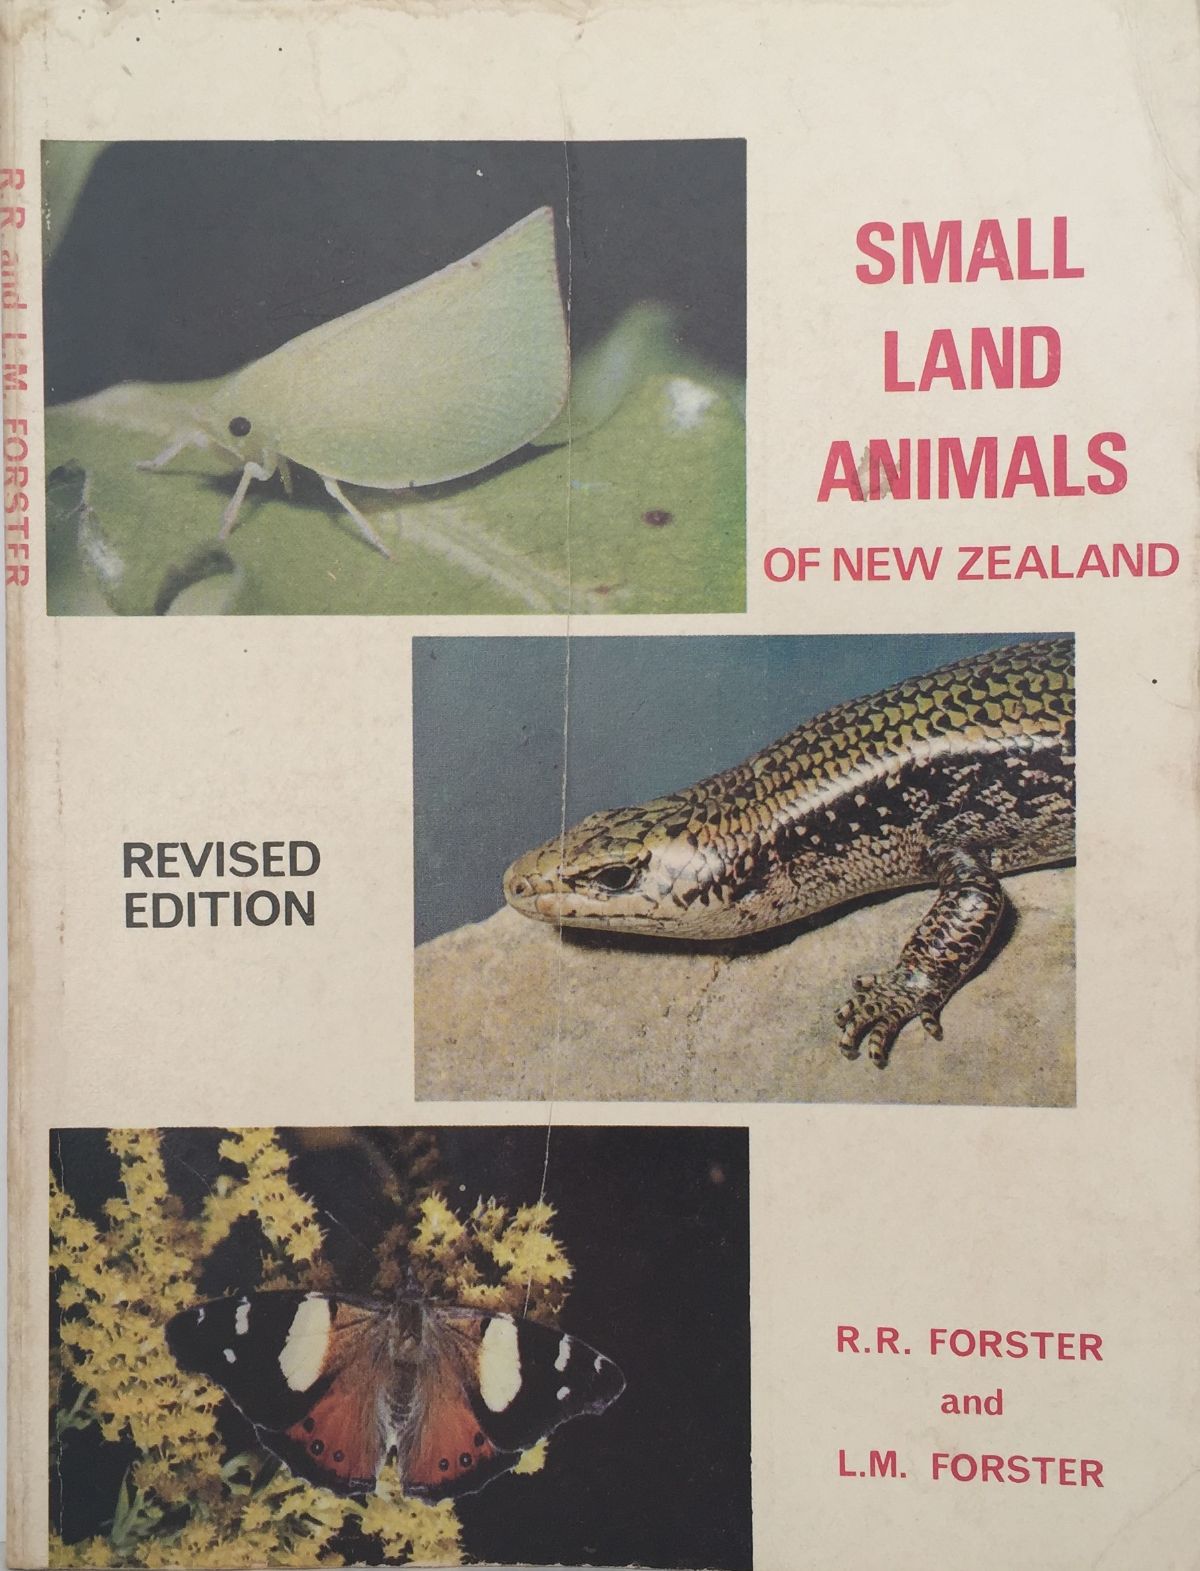 Small Land Animals of New Zealand